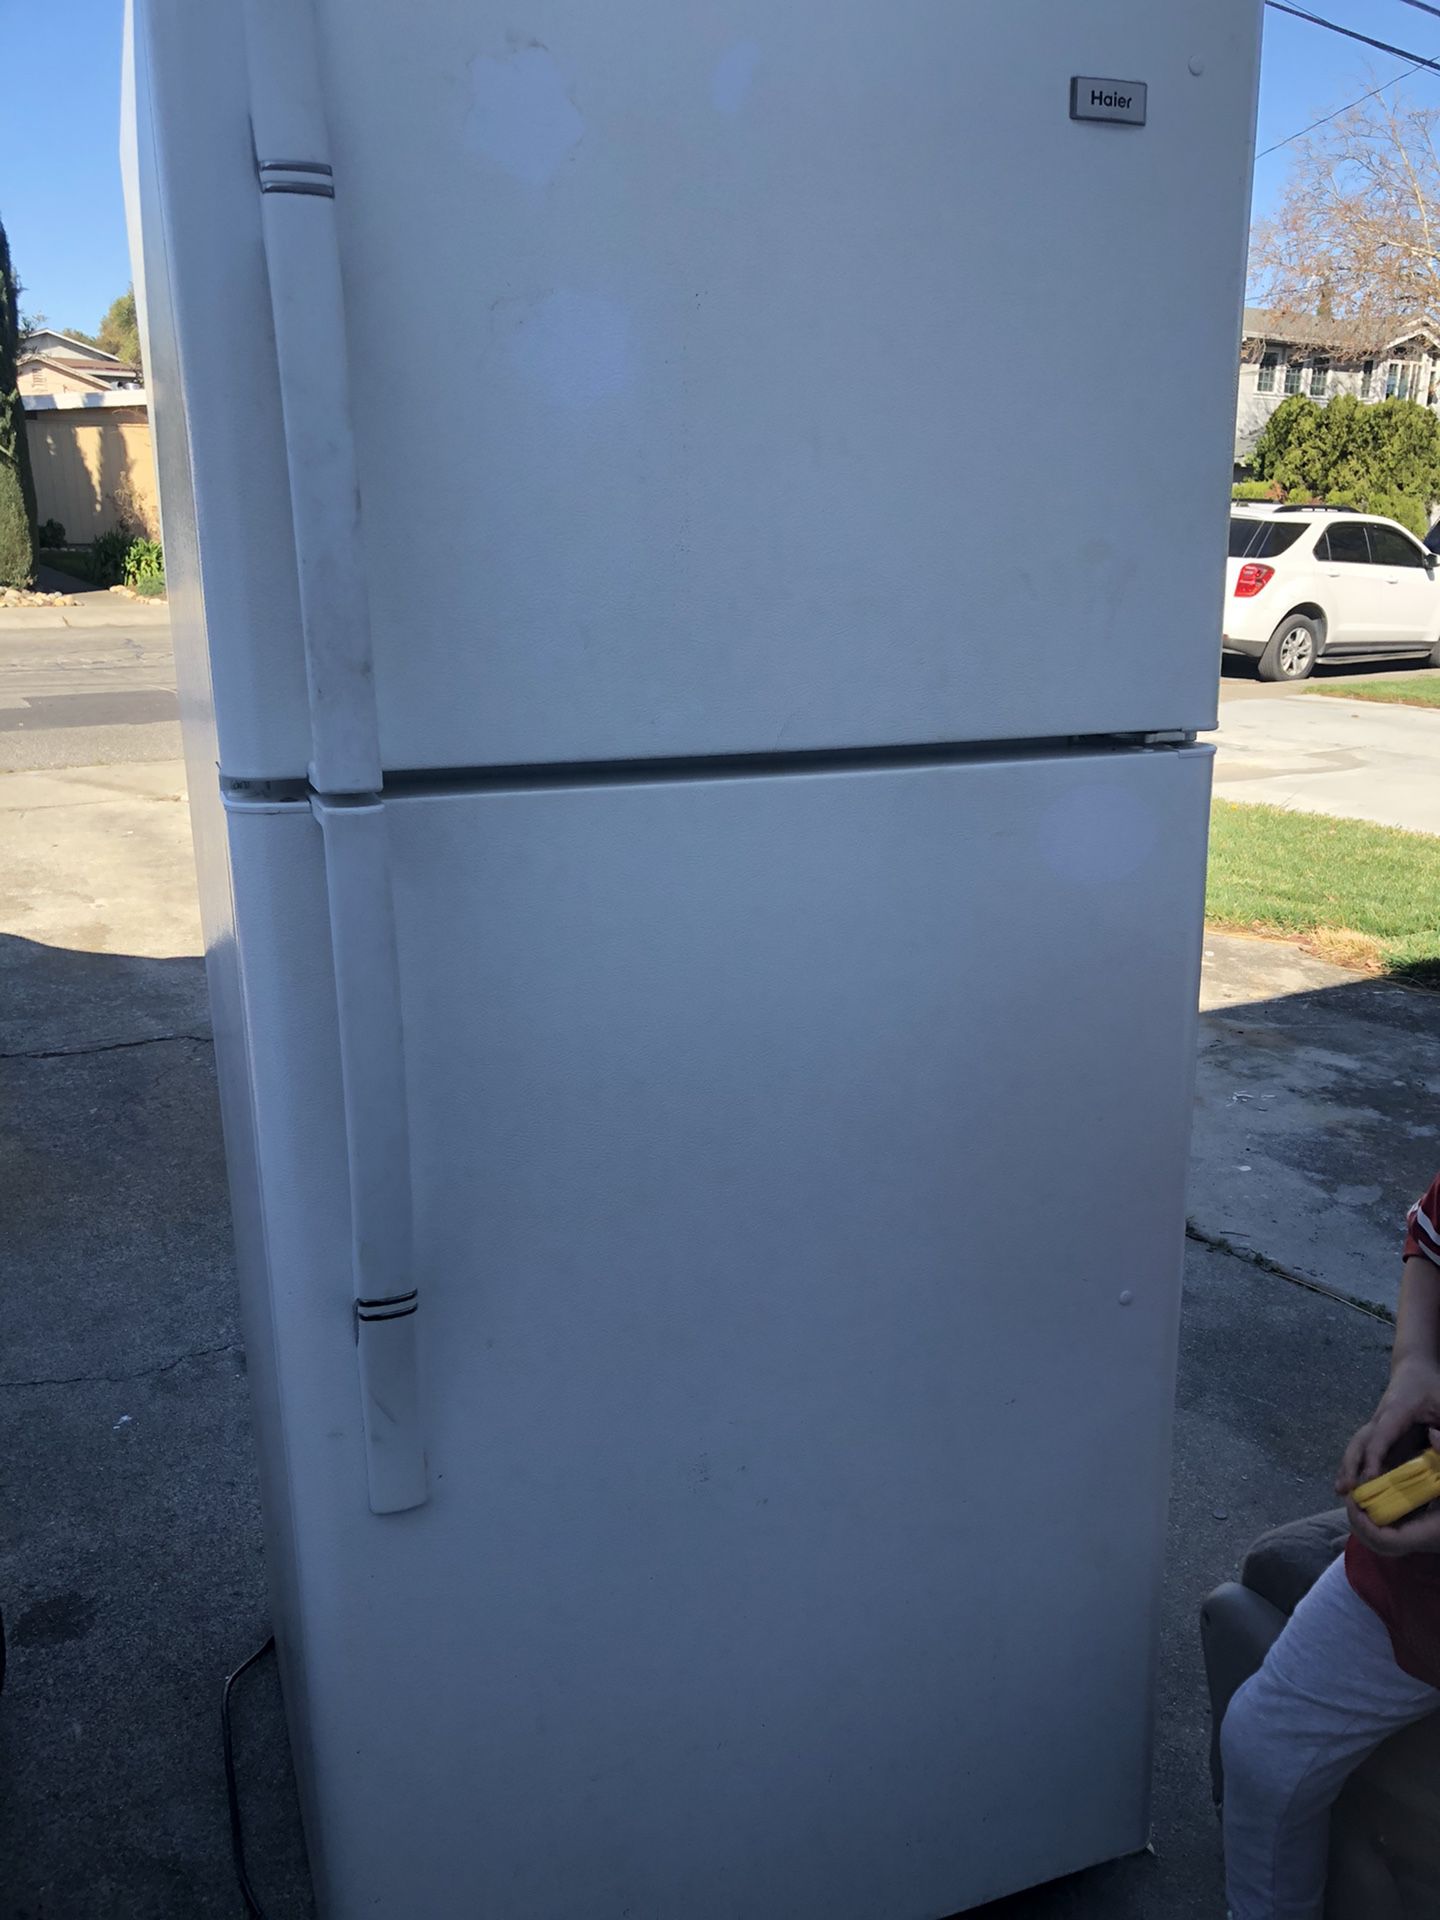 Haier refrigerator 18.2 cubic feet